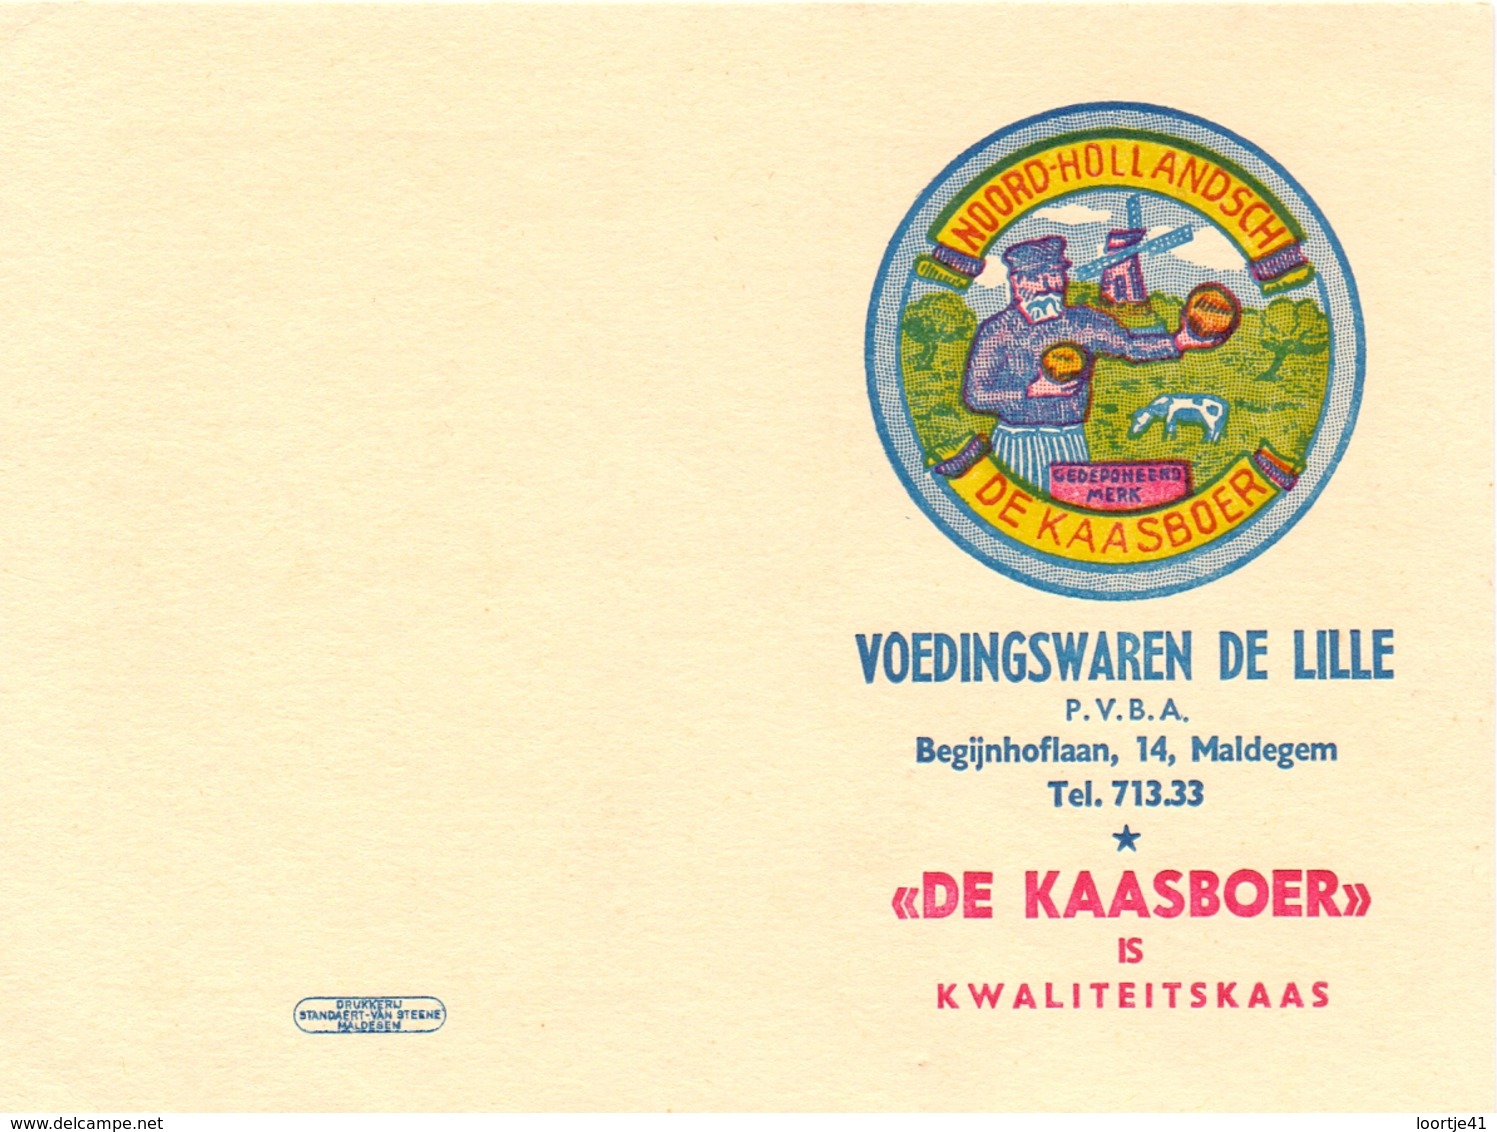 Kalender Calendrier 1962 - Pub Reclame De Kaasboer - Voeding De Lille - Maldegem - Small : 1961-70